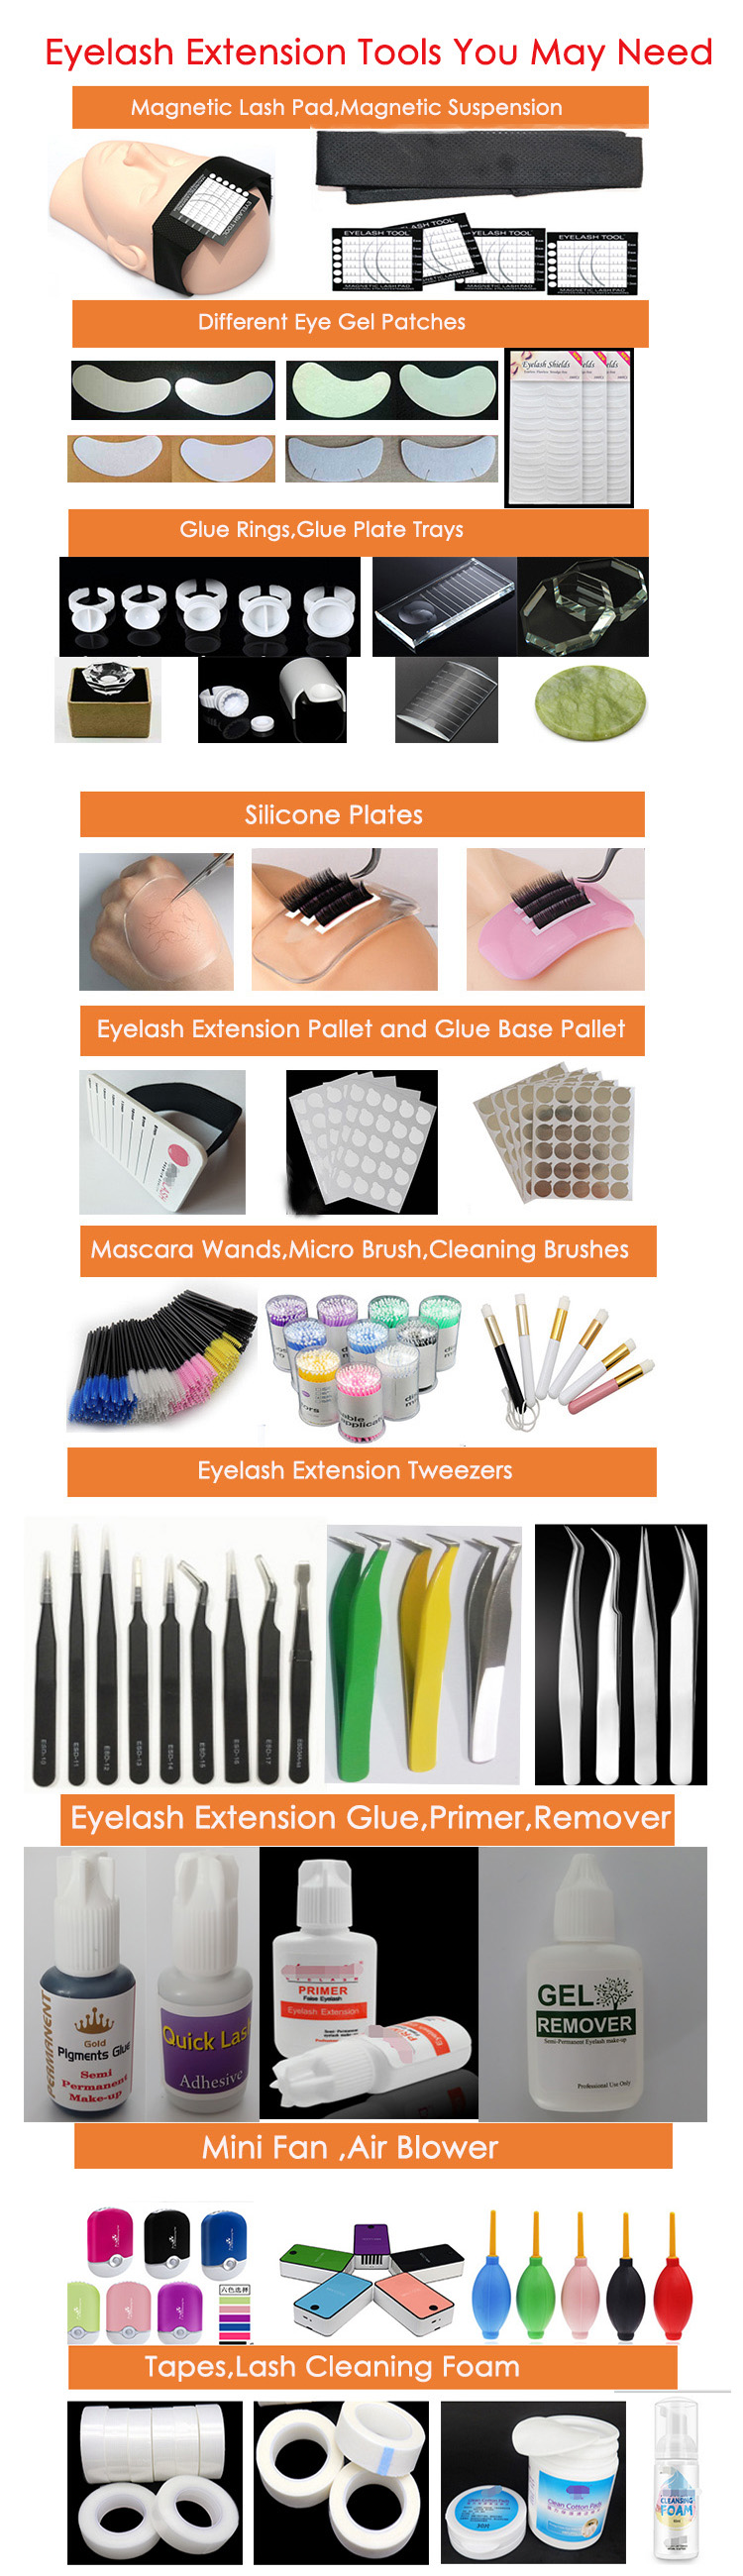 lash-extensions-tools-factory-supply-China.jpg